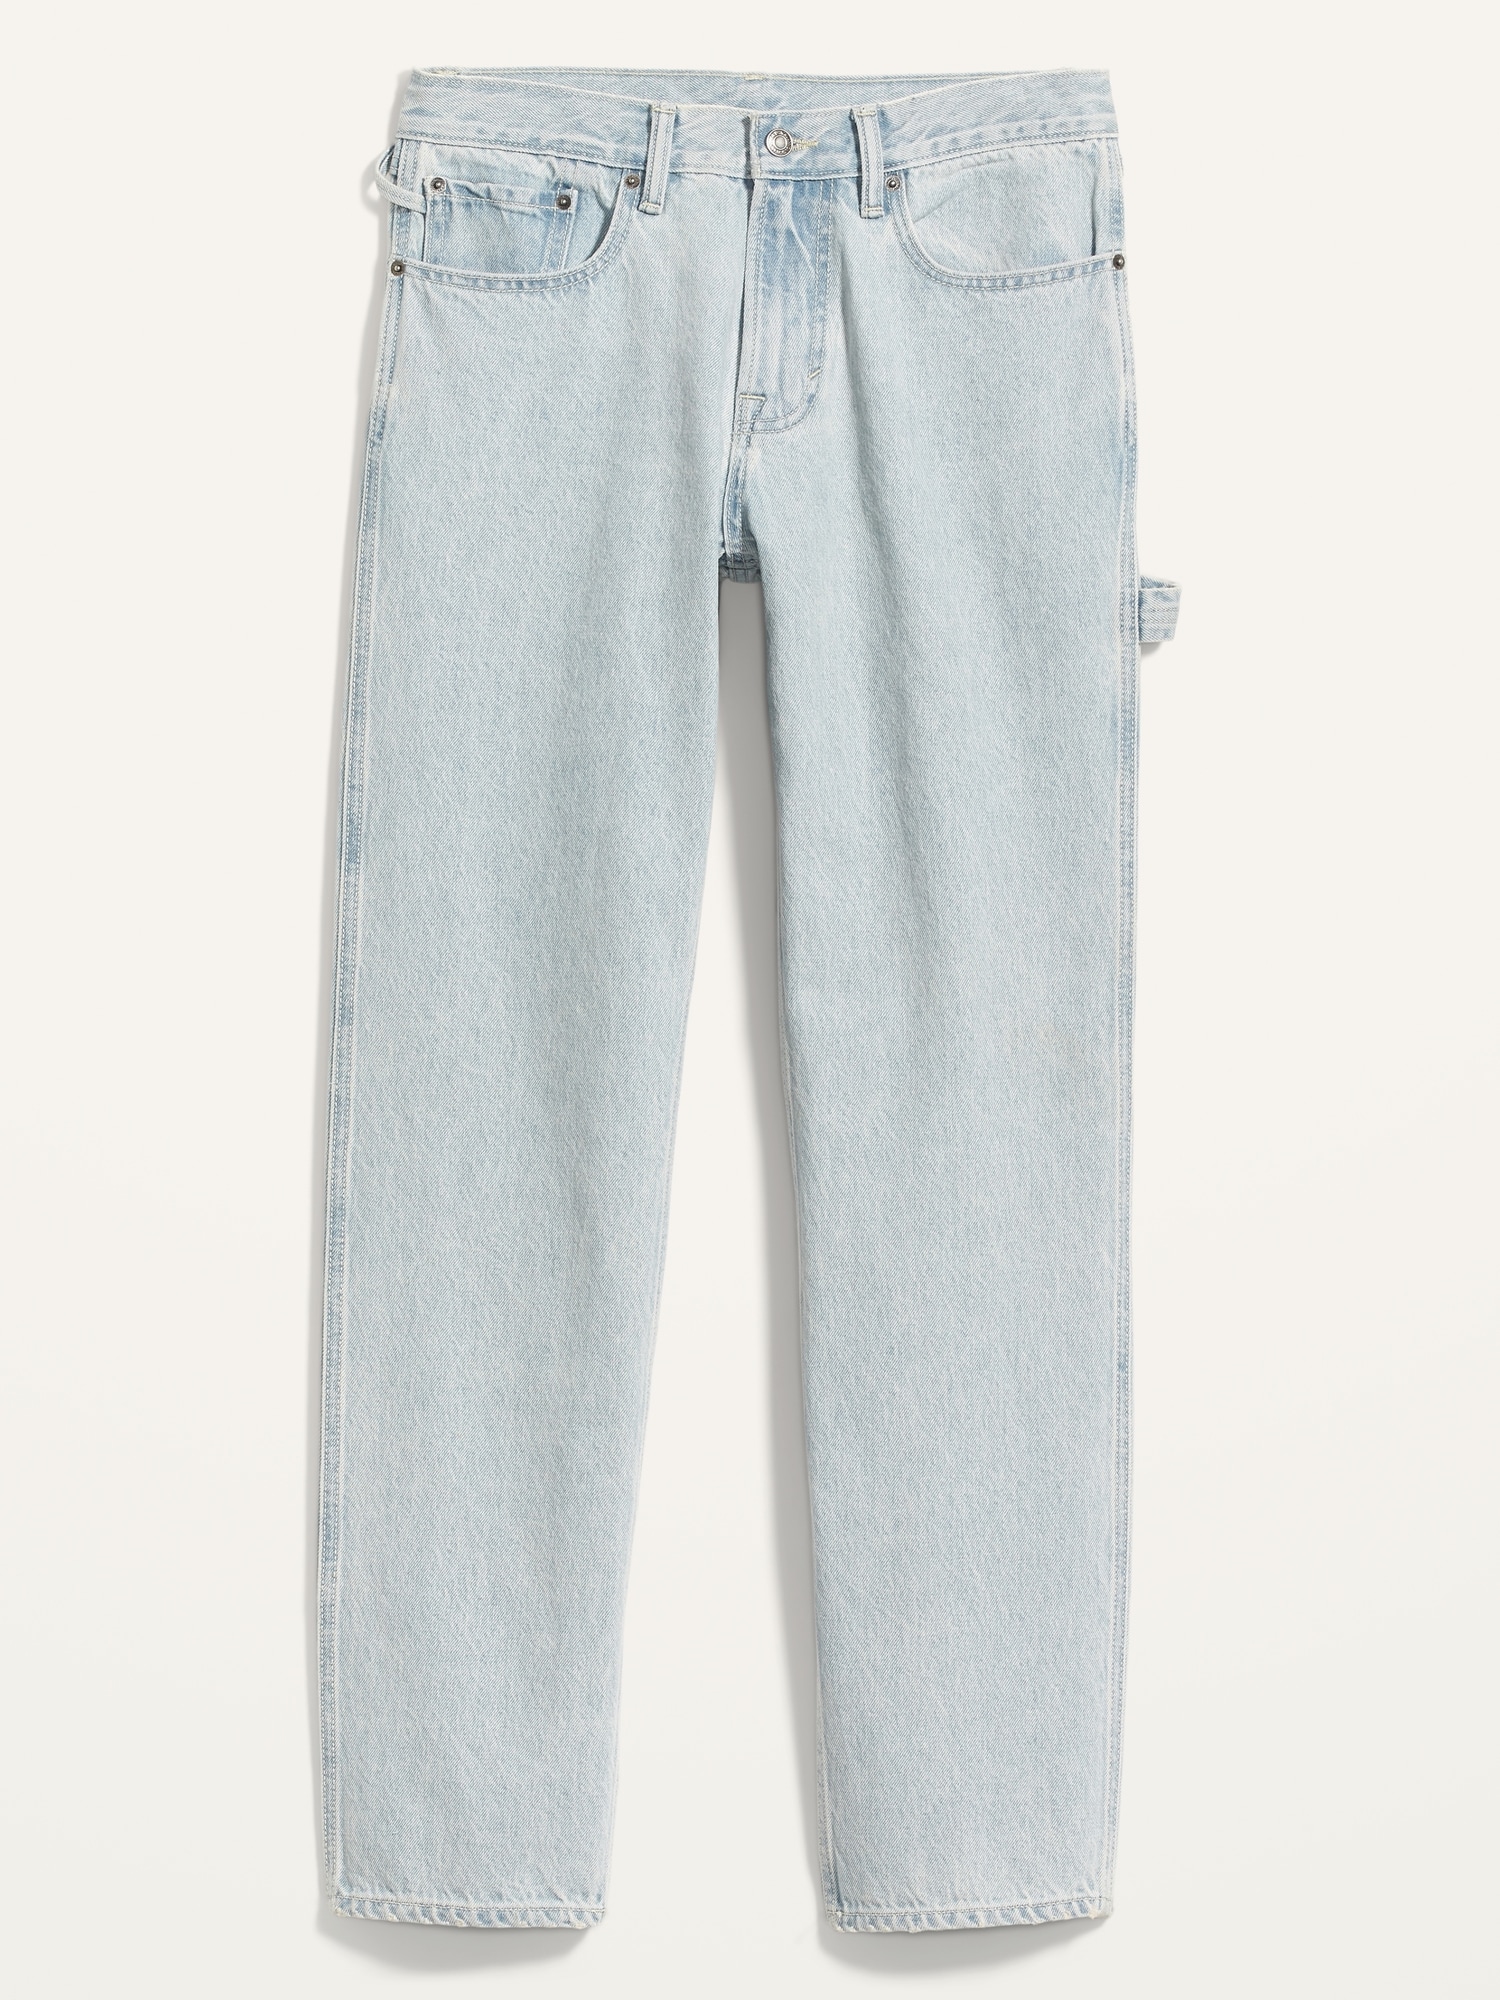 Loose Rigid Non-Stretch Carpenter Jeans for Men